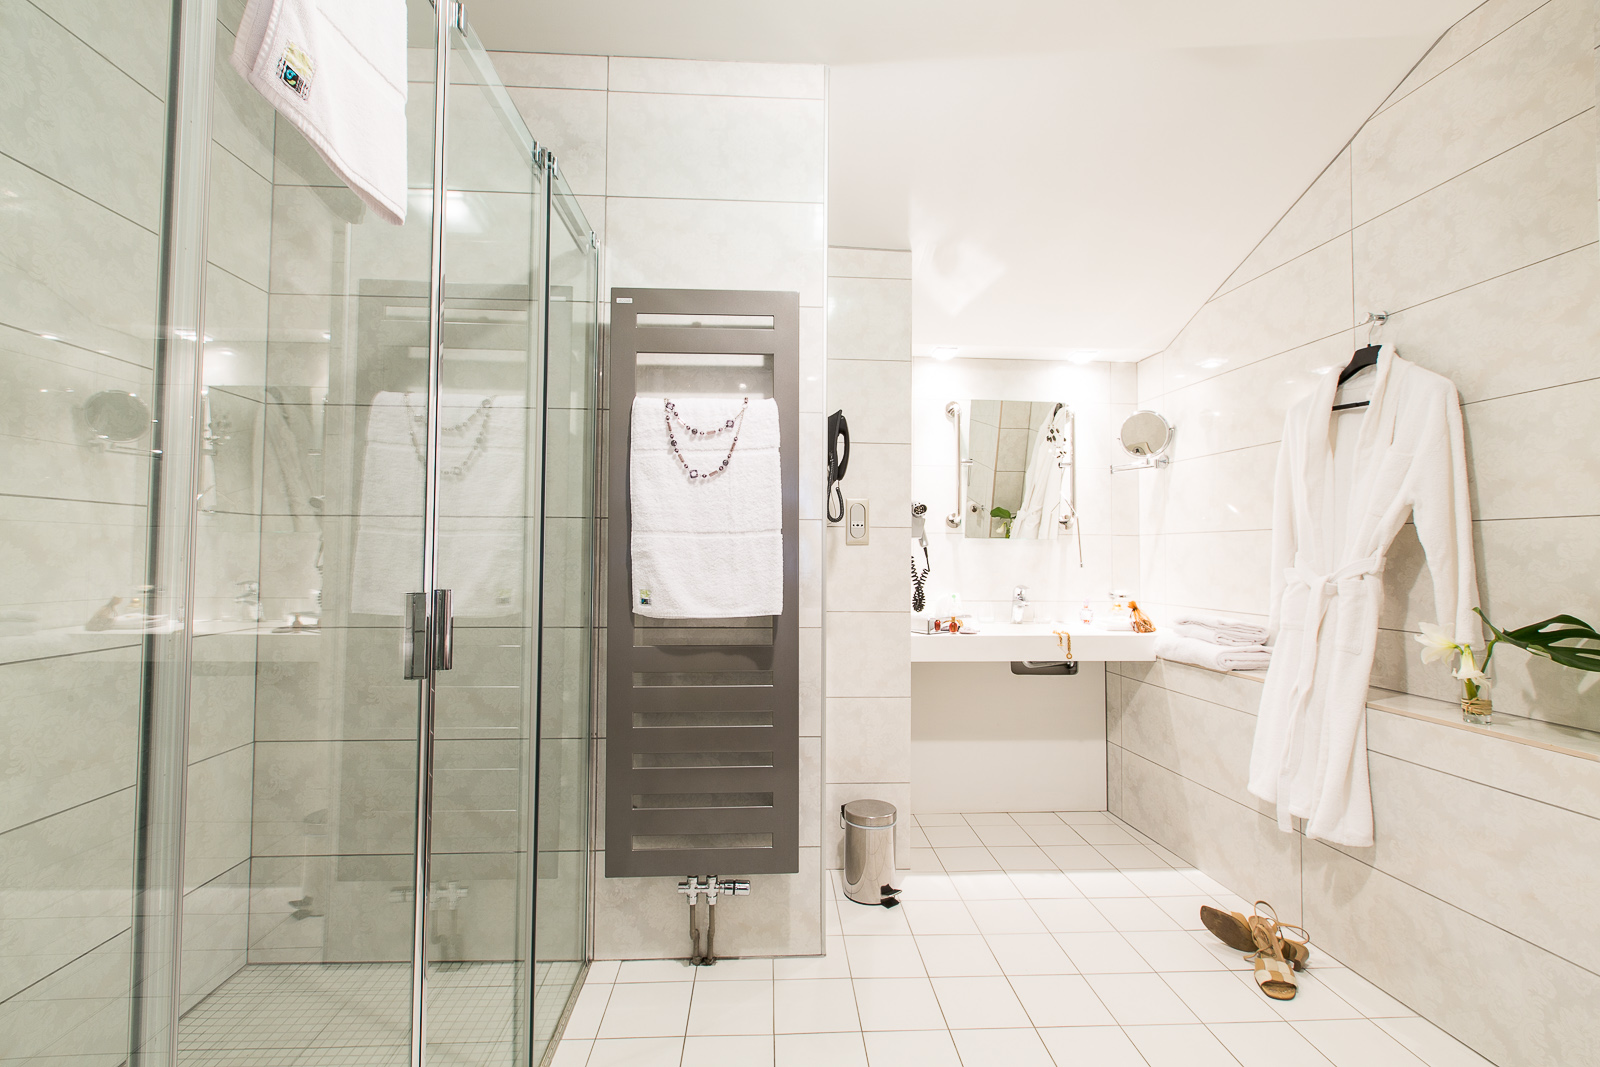 Hôtel Marotte chambre cosy salle de bain blanche douche